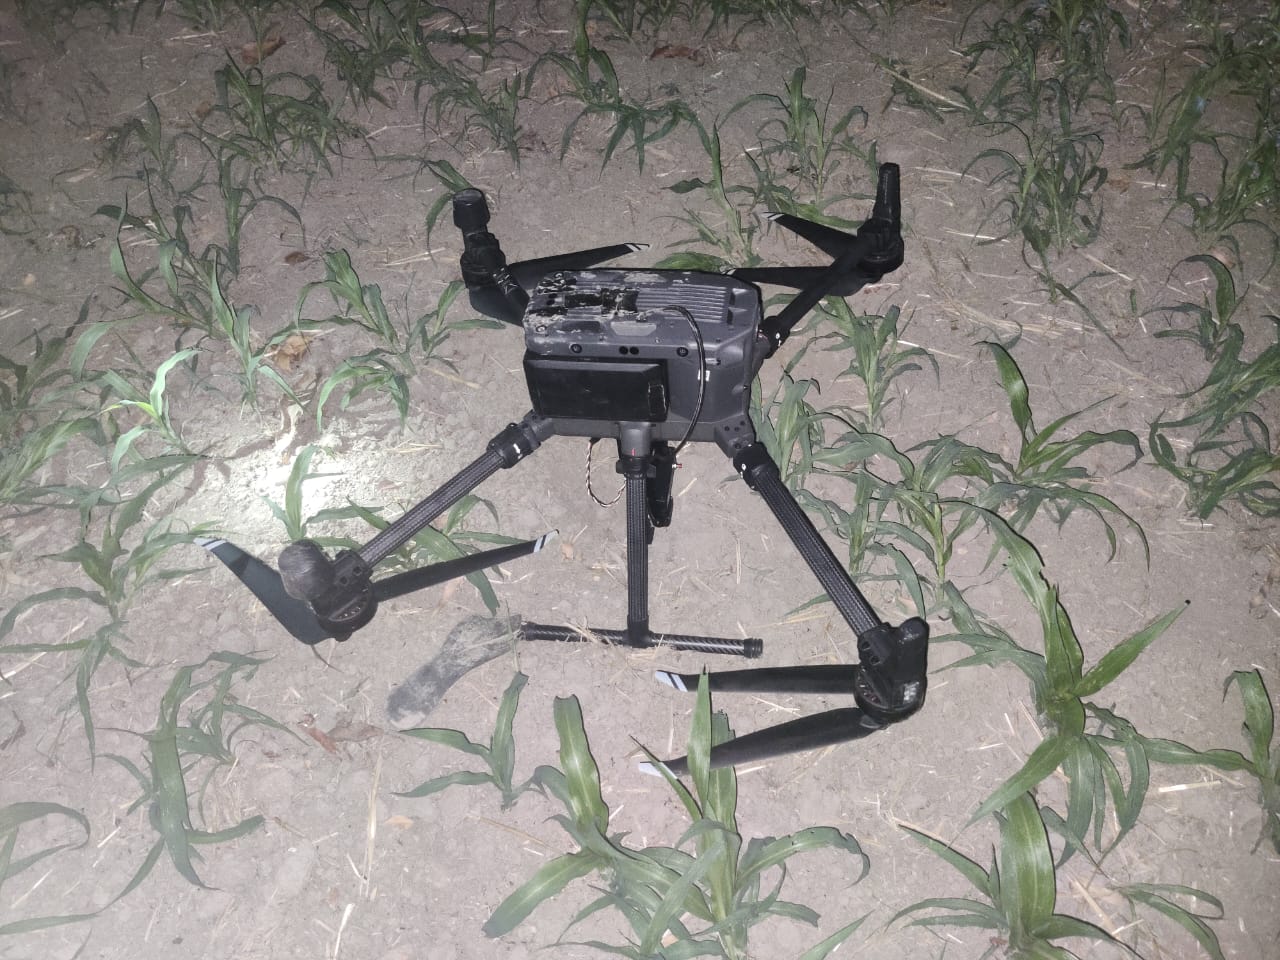 Recovery Of Pakistani Drones Near Punjab's Amritsar And Tarn Taran